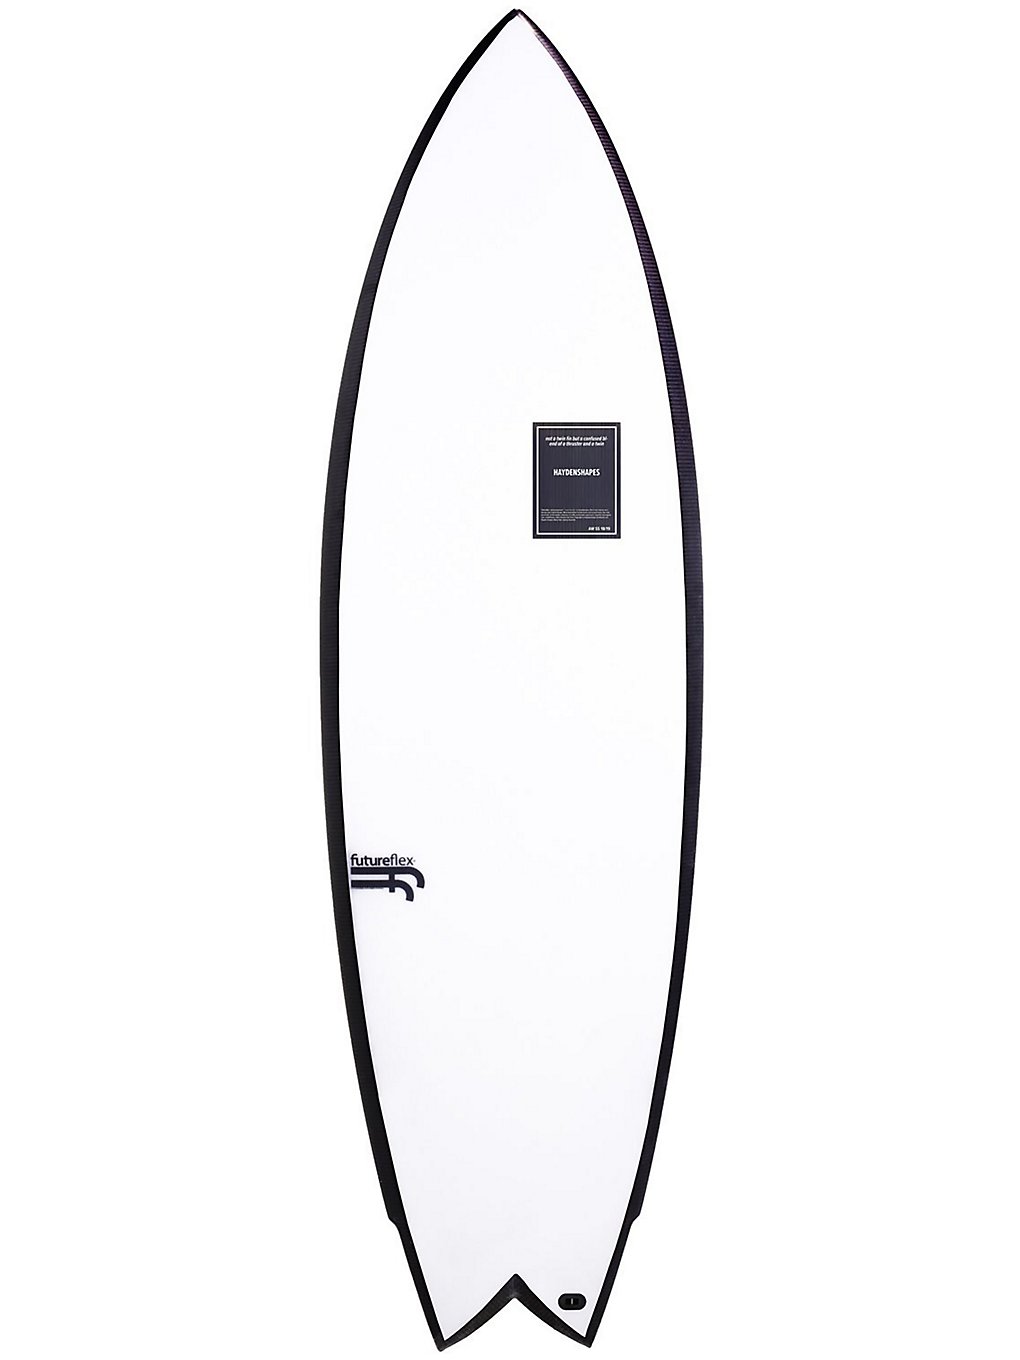 Haydenshapes Misc Future Flex Futures 6'2 Surfboard model logo